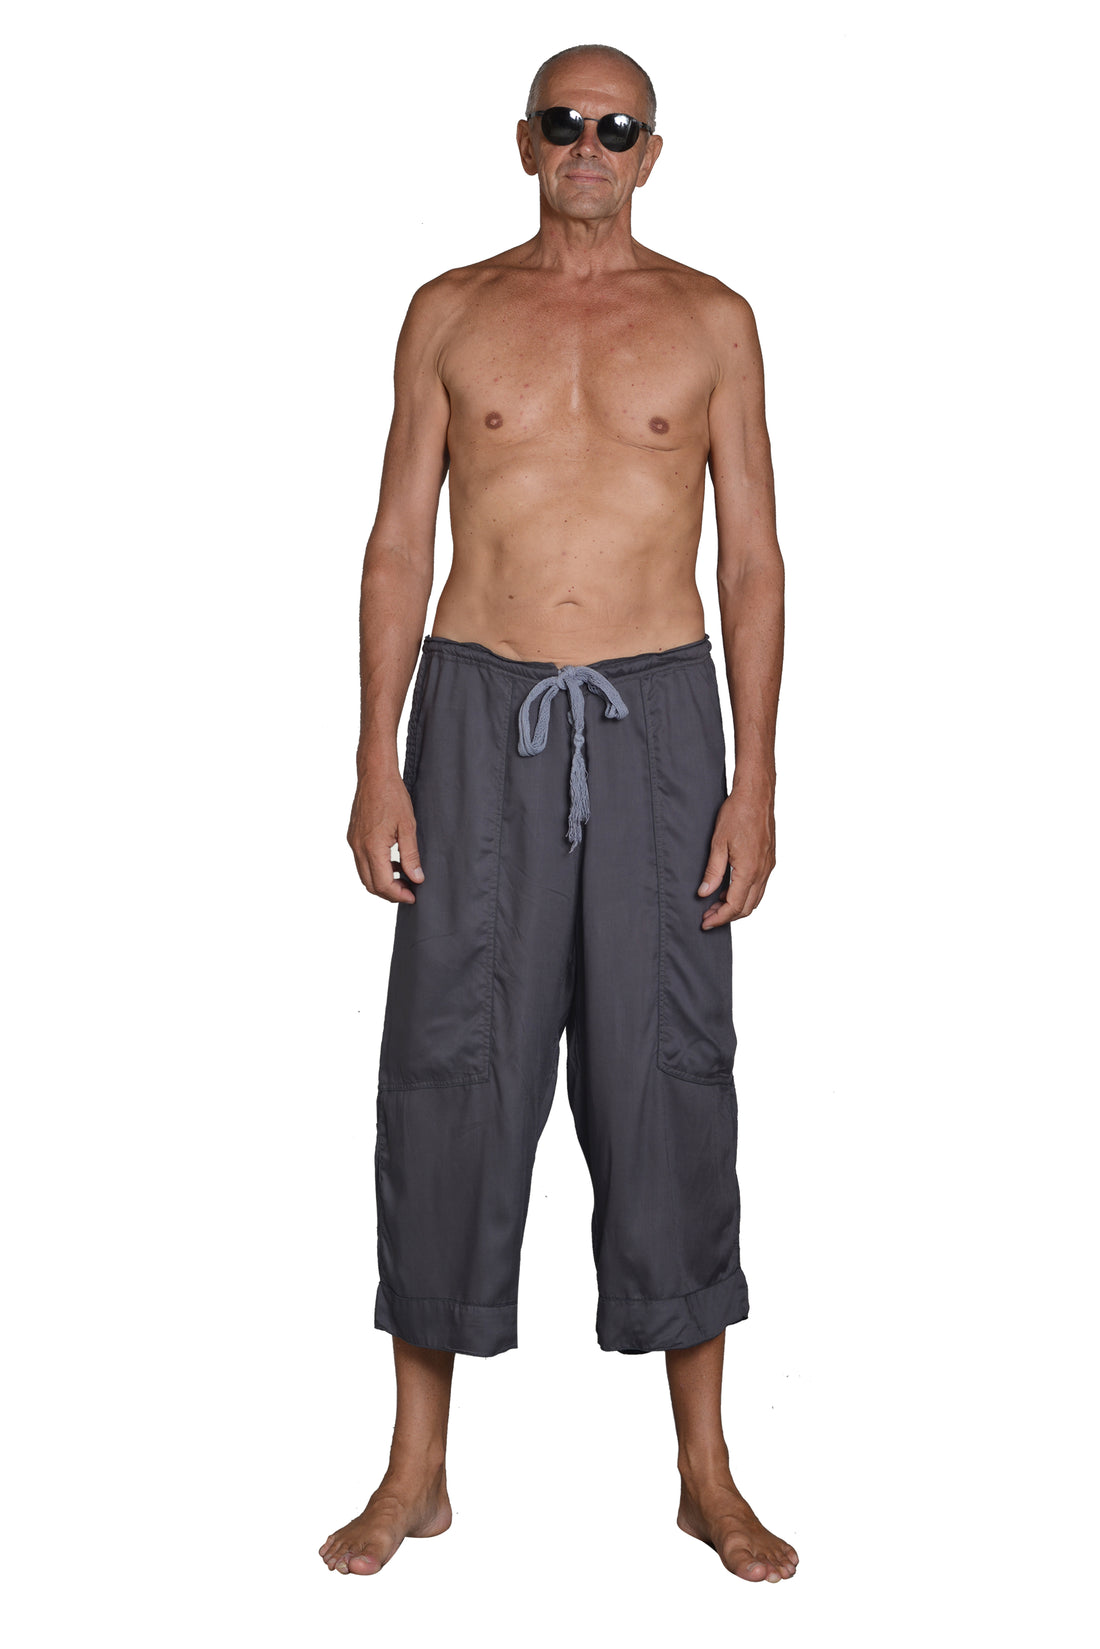 Dalbert - Rayon Solid Drawstring Cropped Men's Pant (6208725647556)